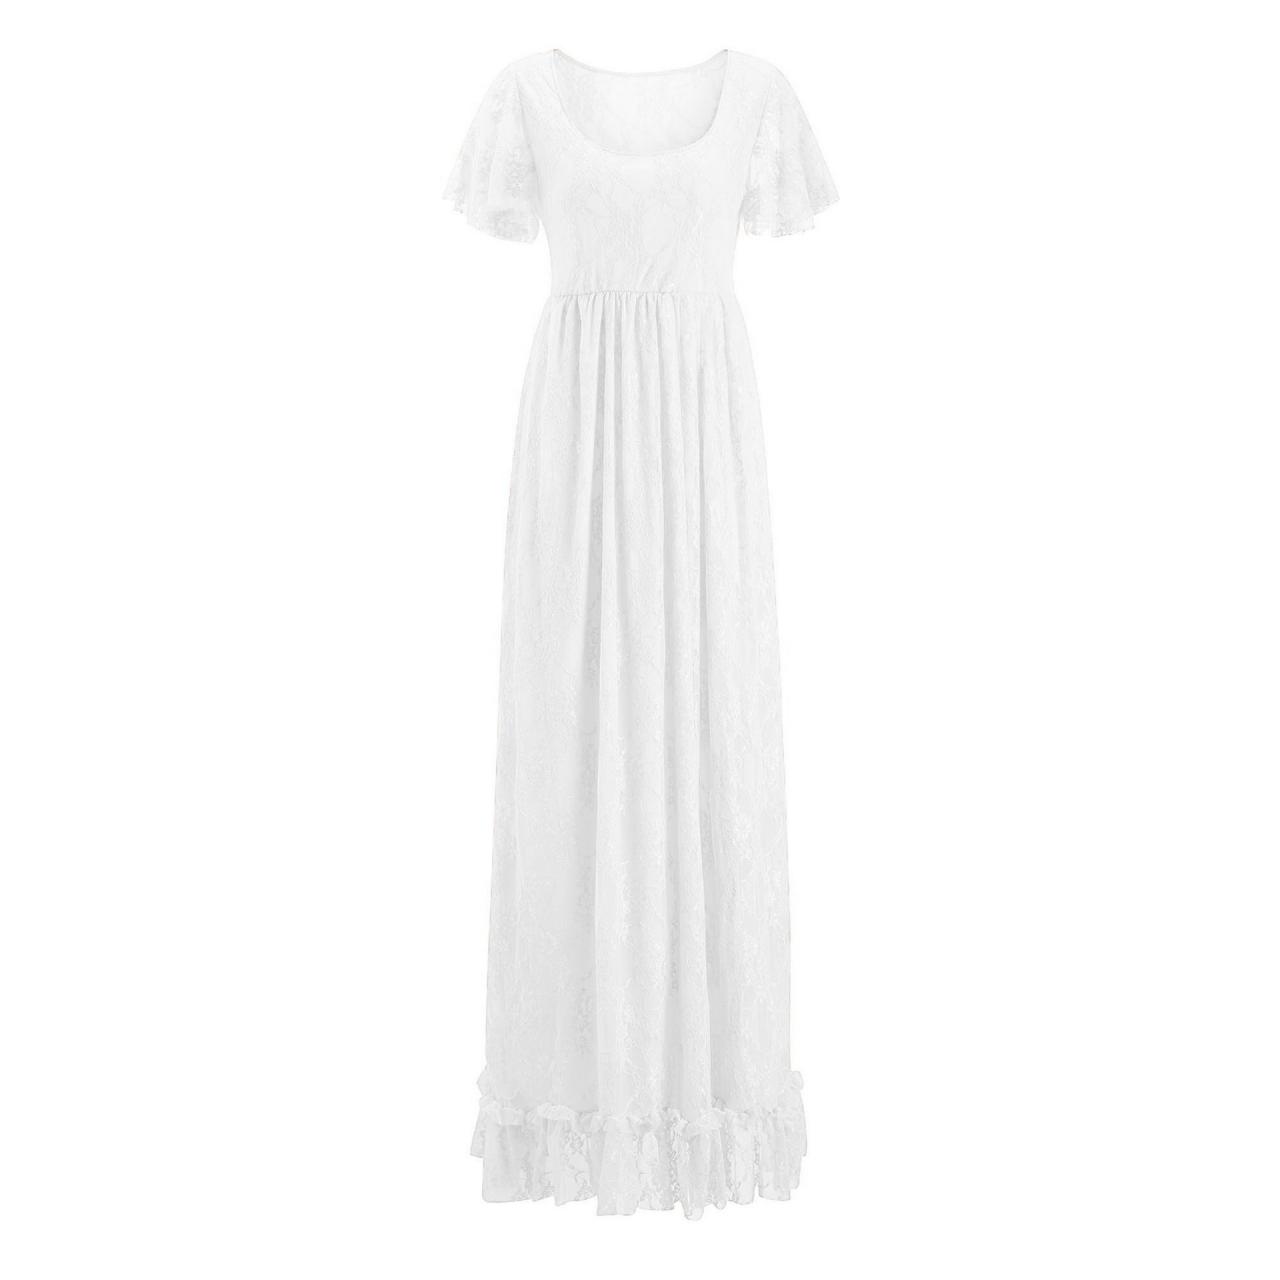 Long Lace Pregnant Dress Women Casual Ruffles Short Sleeve Evening Party Maxi Maternal Pregnancy Dress Off White